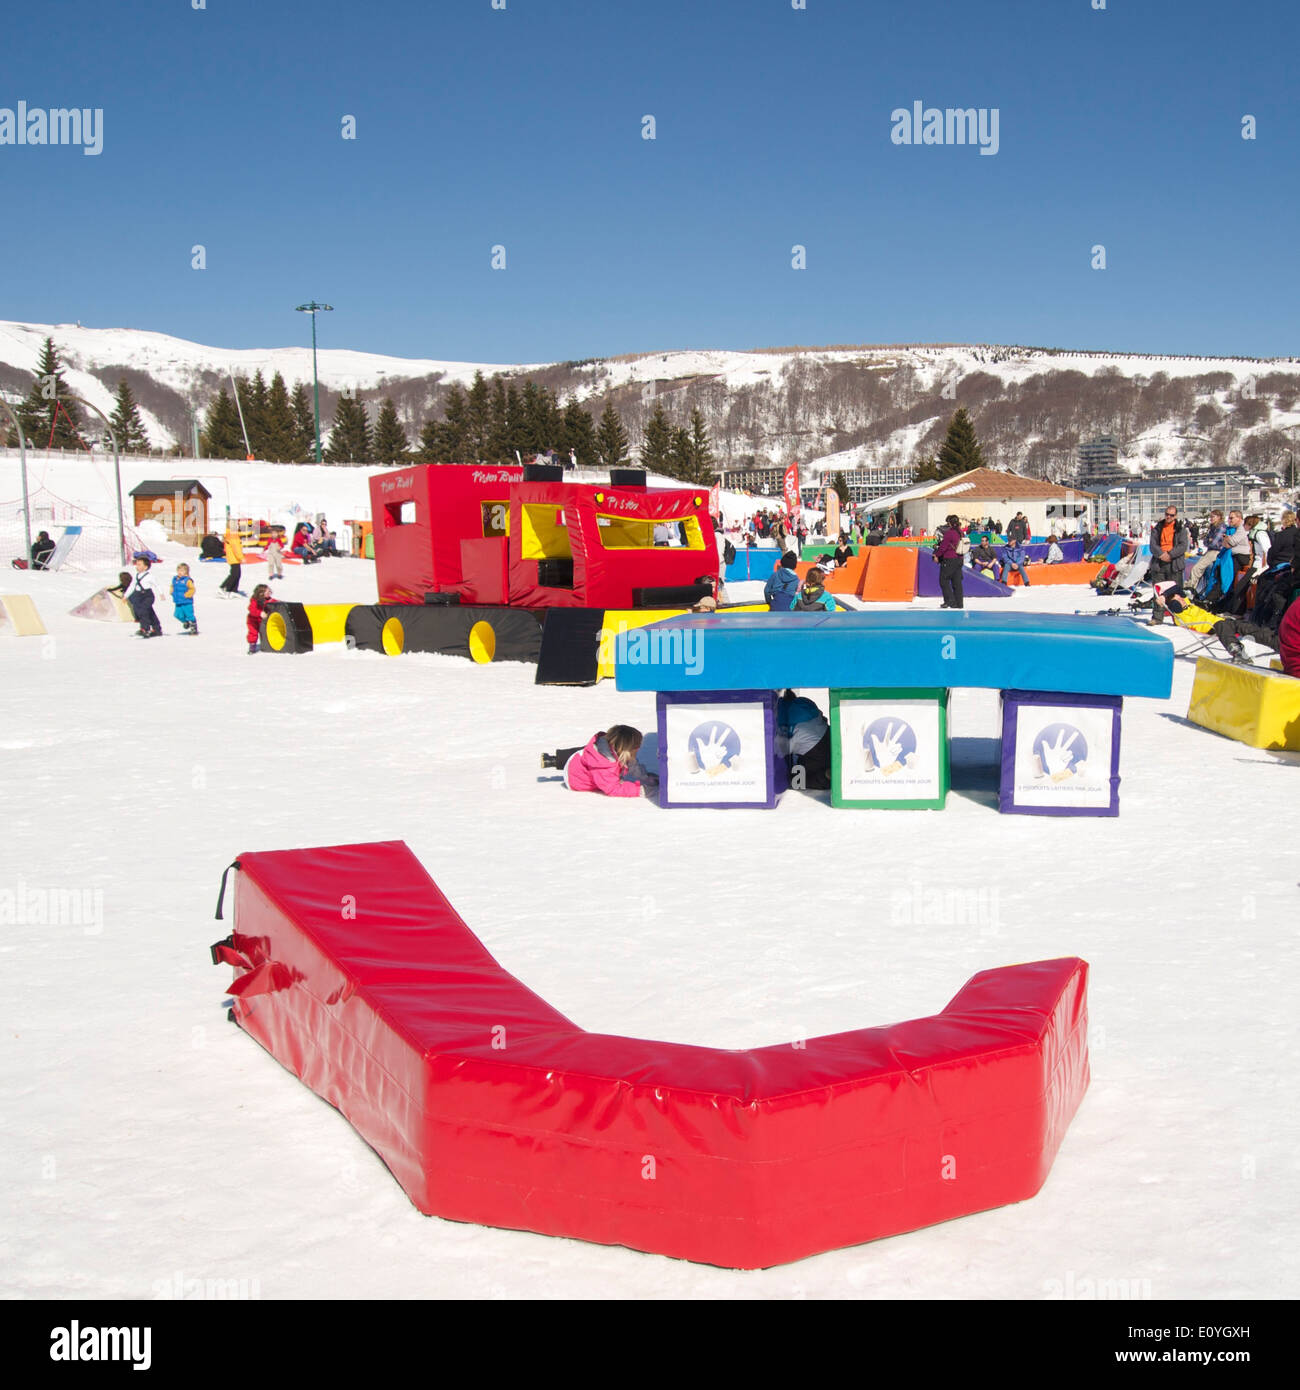 Ski school at Super Besse ski resort, Auvergne, France - with playground equipment Stock Photo